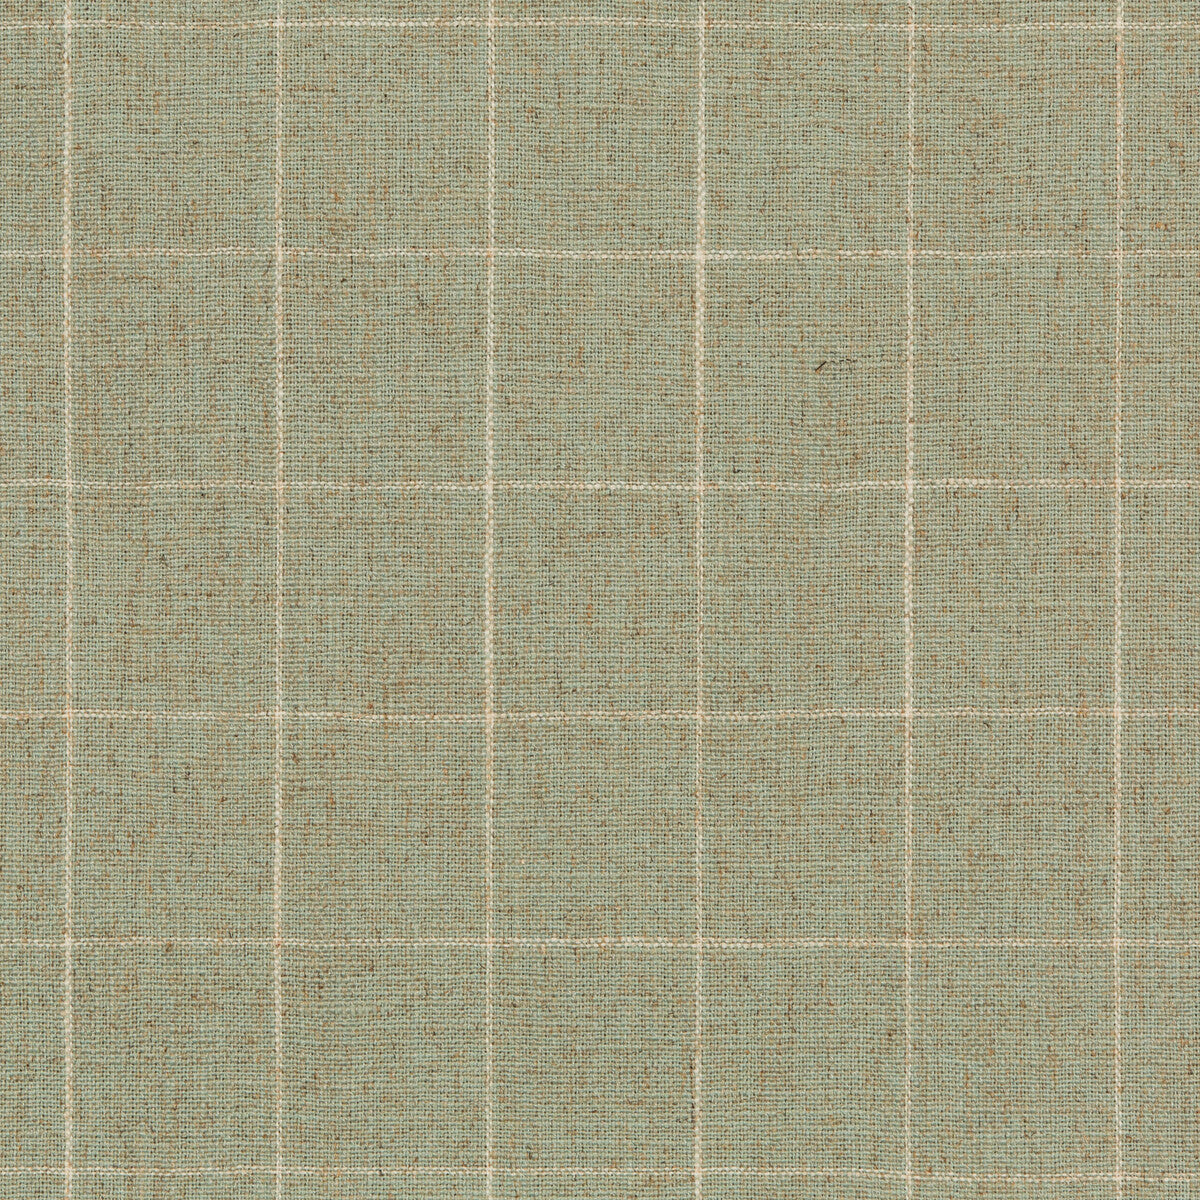 Kf Smt fabric - pattern 35930.23.0 - by Kravet Smart in the Performance Kravetarmor collection